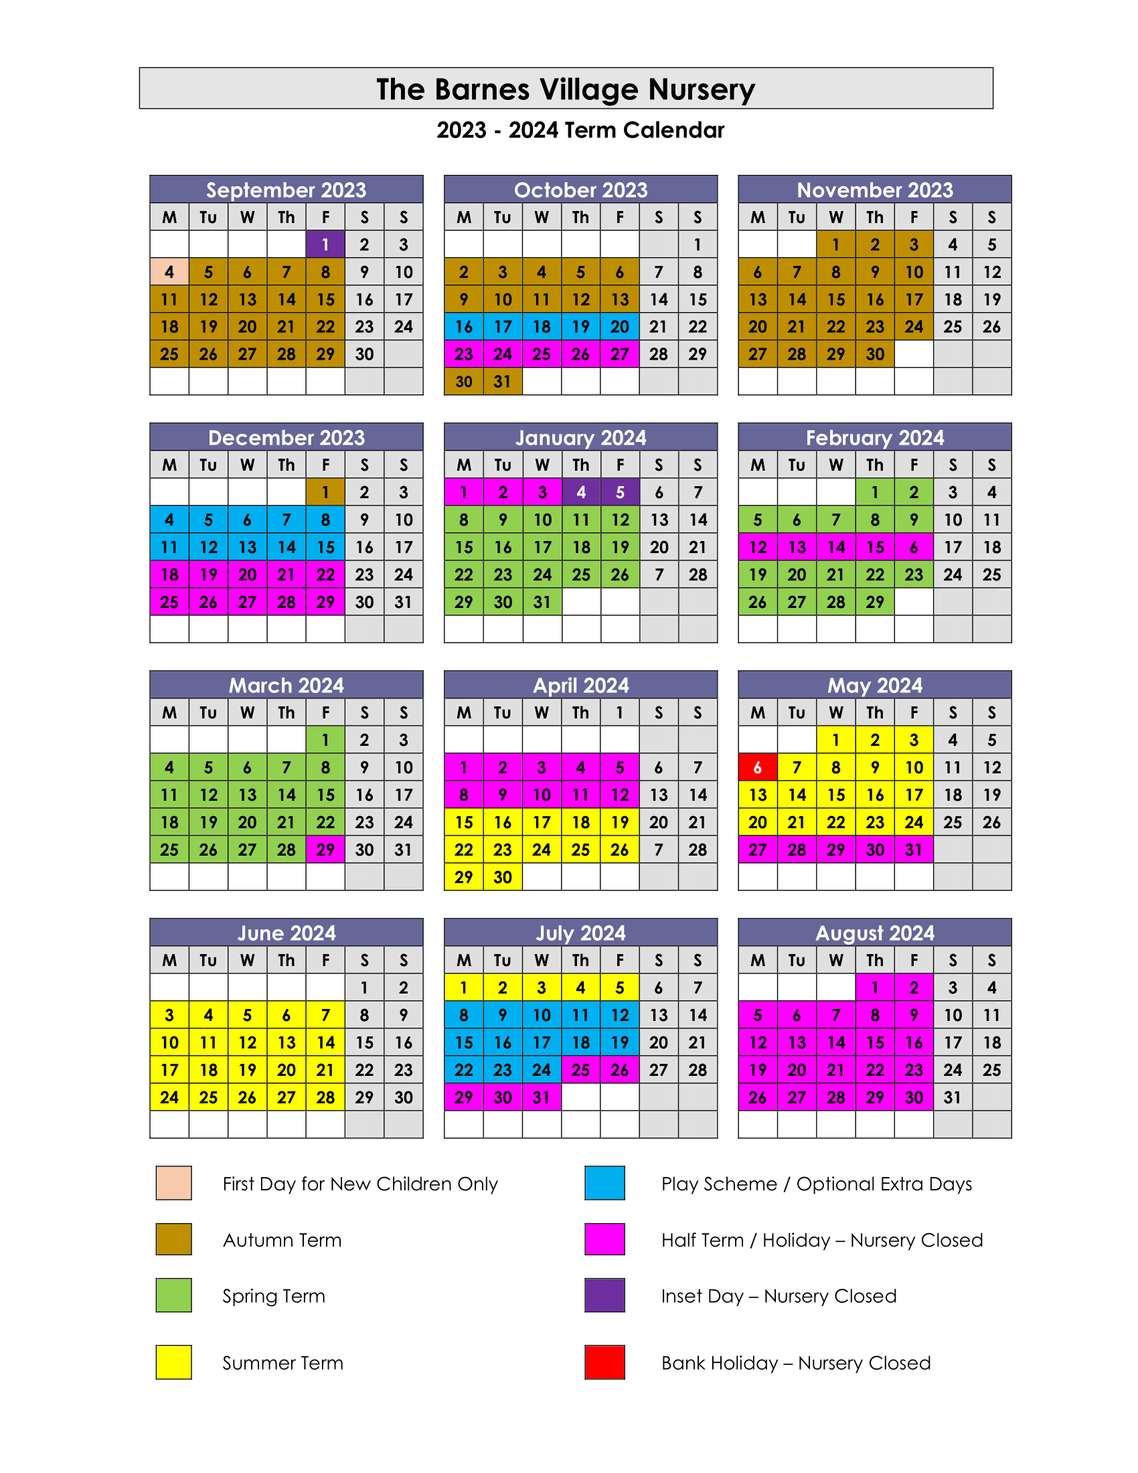 The Barnes Village Nursery 2023-2024 Term Calendar